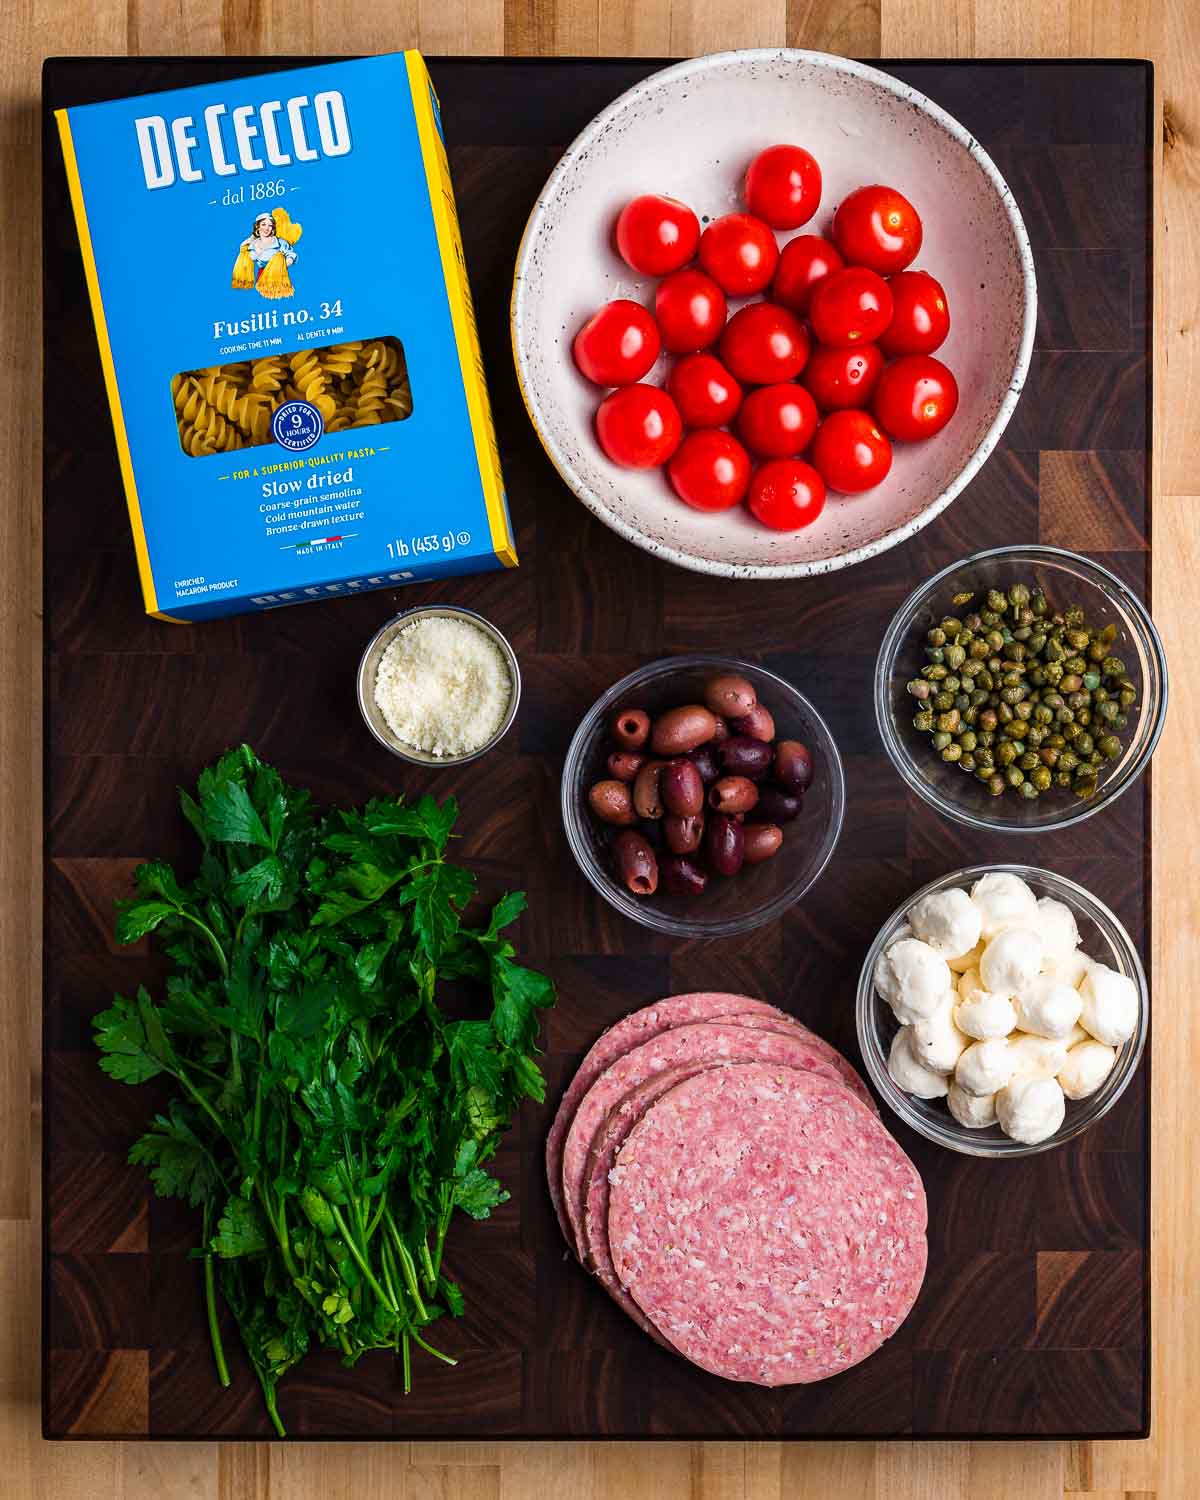 Ingredients shown: fusilli, tomatoes, Pecorino, parsley, olives, capers, salami, and mozzarella.